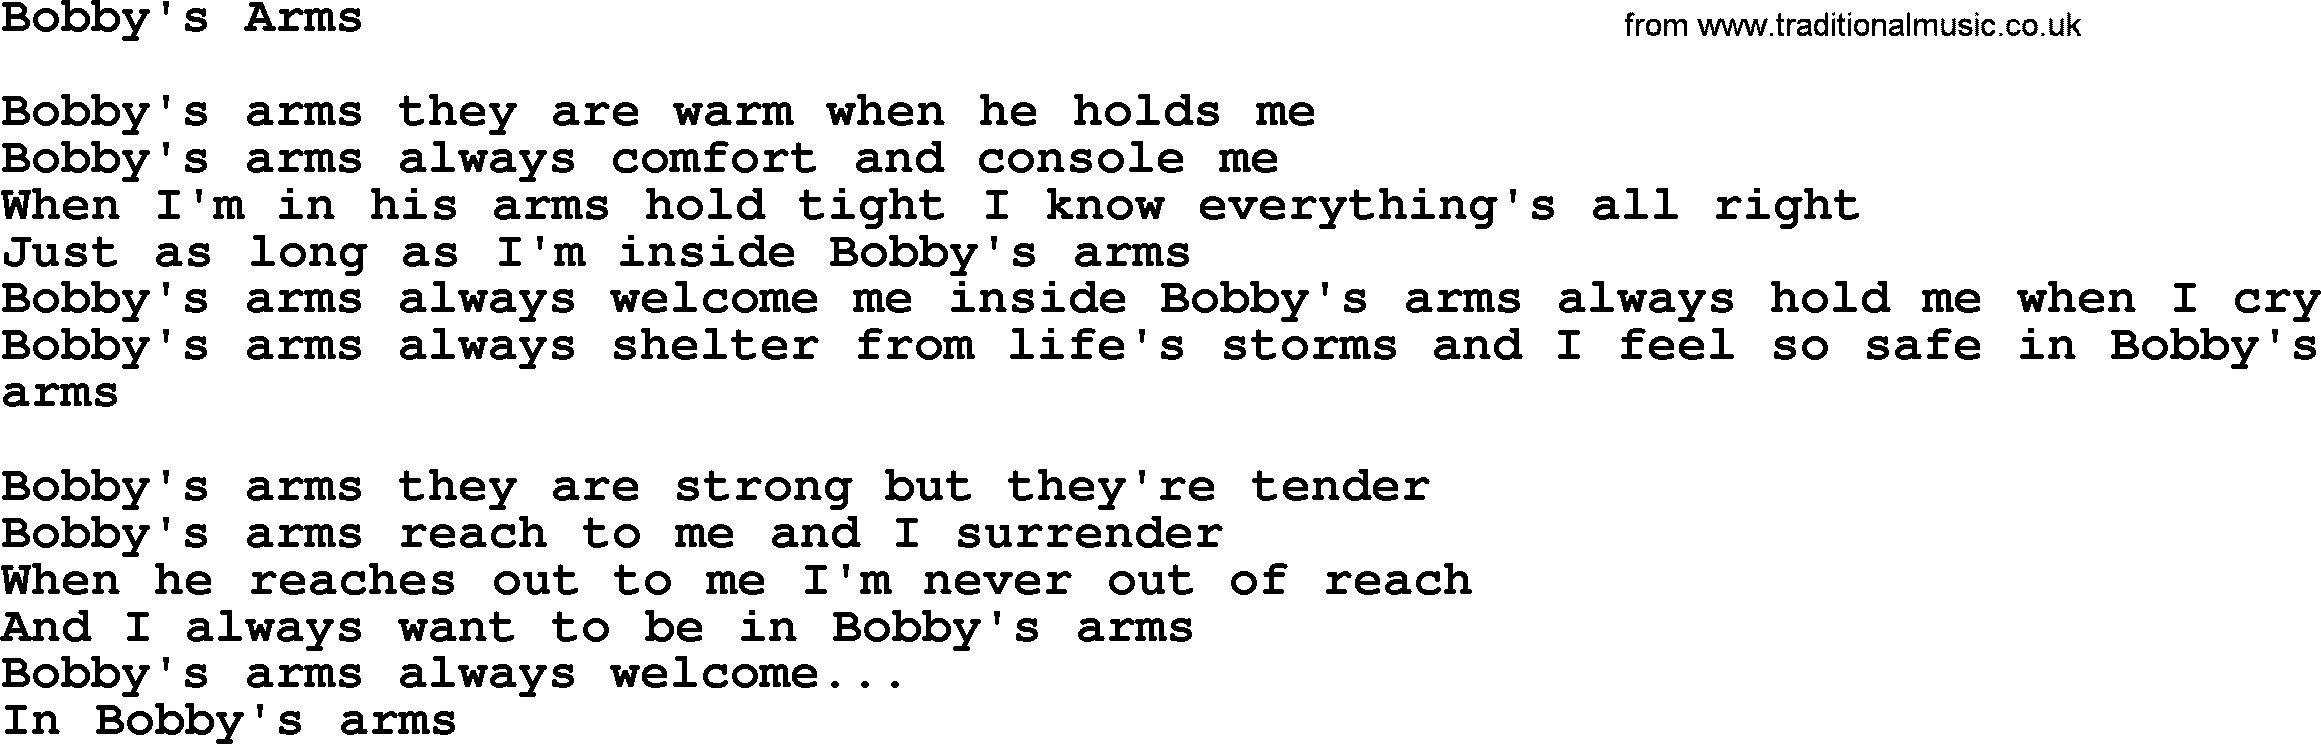 Dolly Parton song Bobby's Arms.txt lyrics